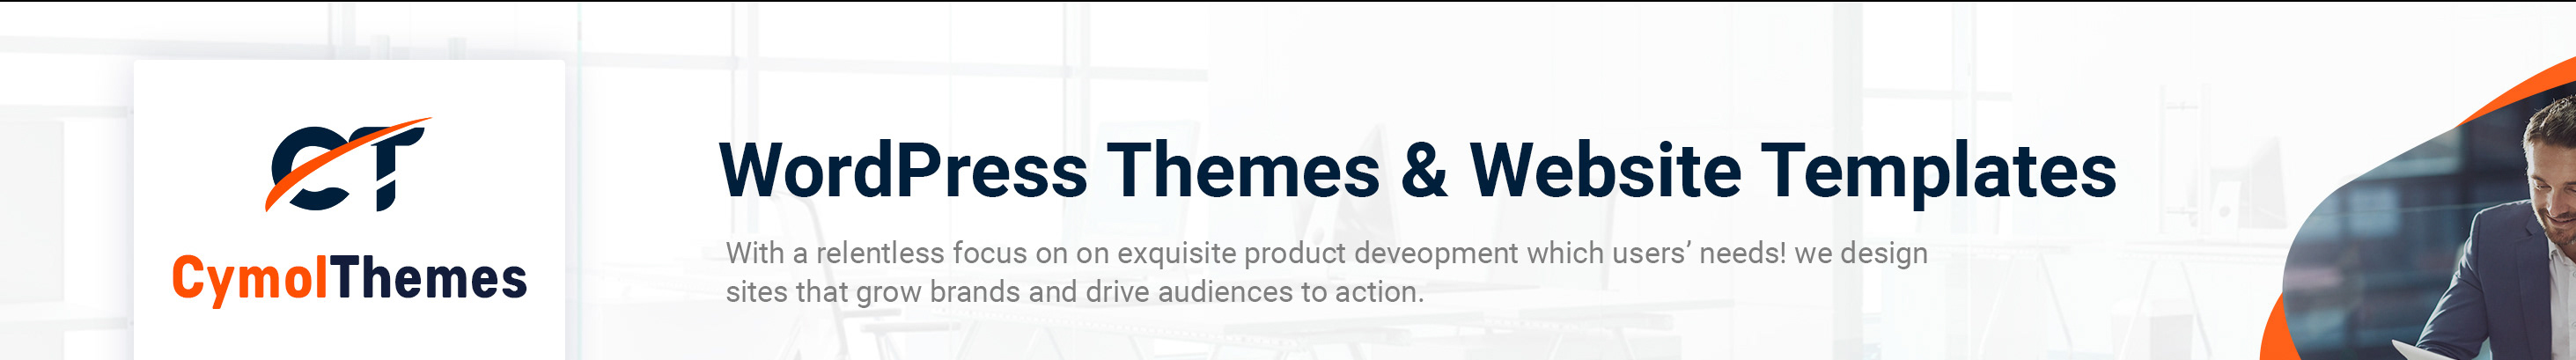 Cymol themes's profile banner